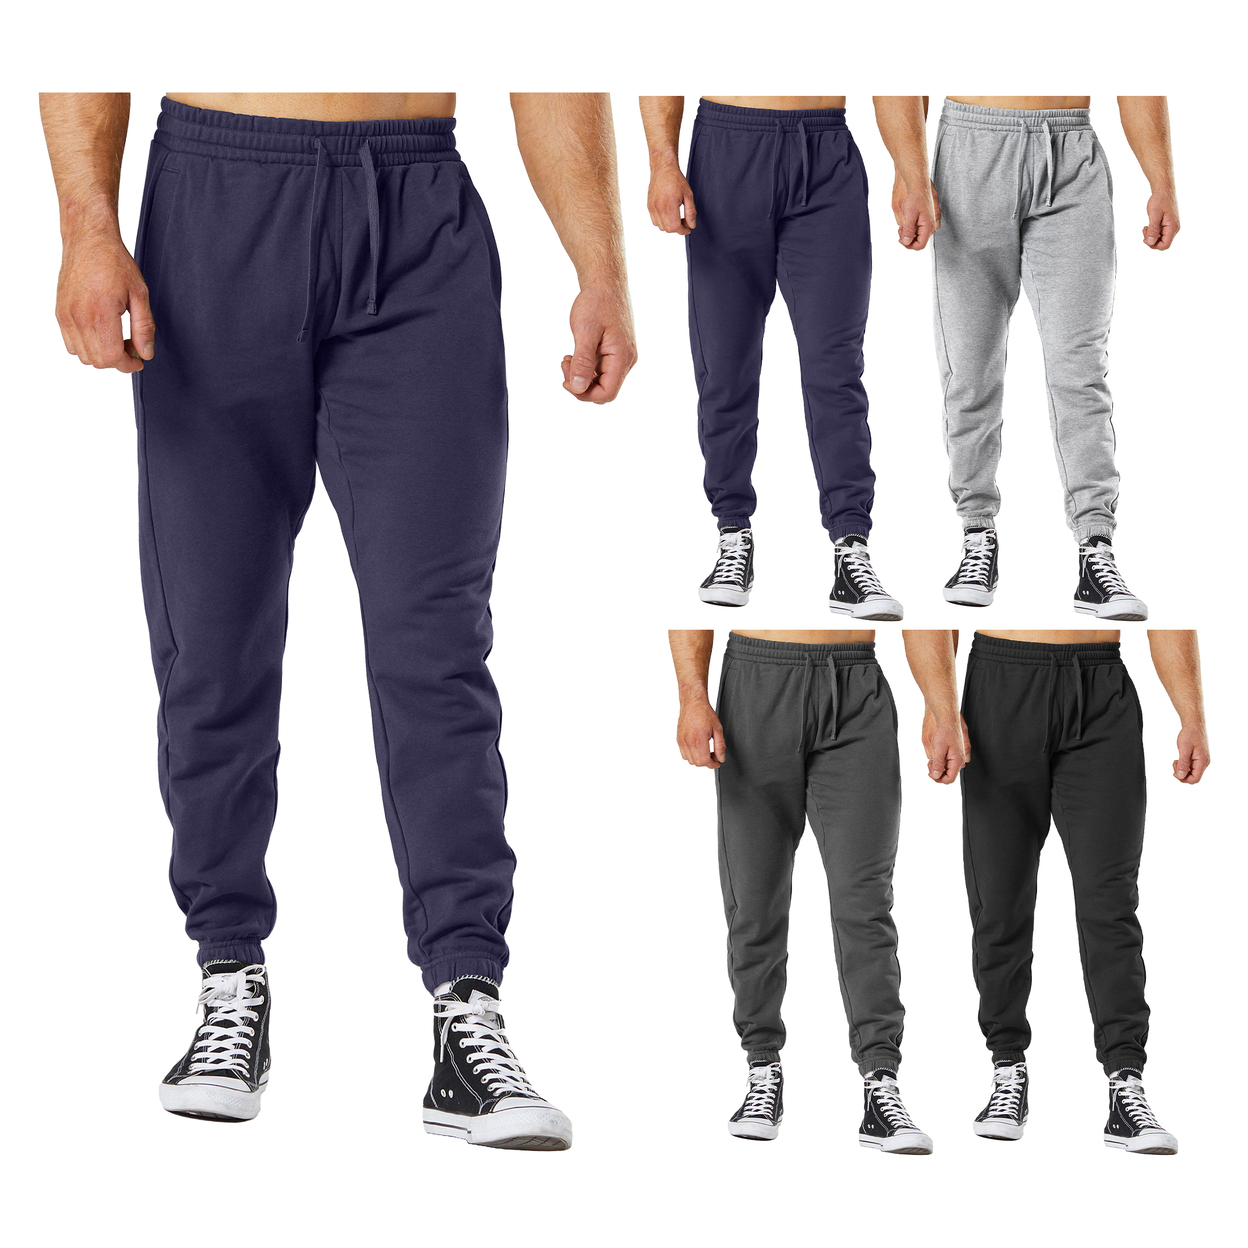 3-Pack: Men's Ultra-Soft Cozy Winter Warm Casual Fleece-Lined Sweatpants Jogger - X-large